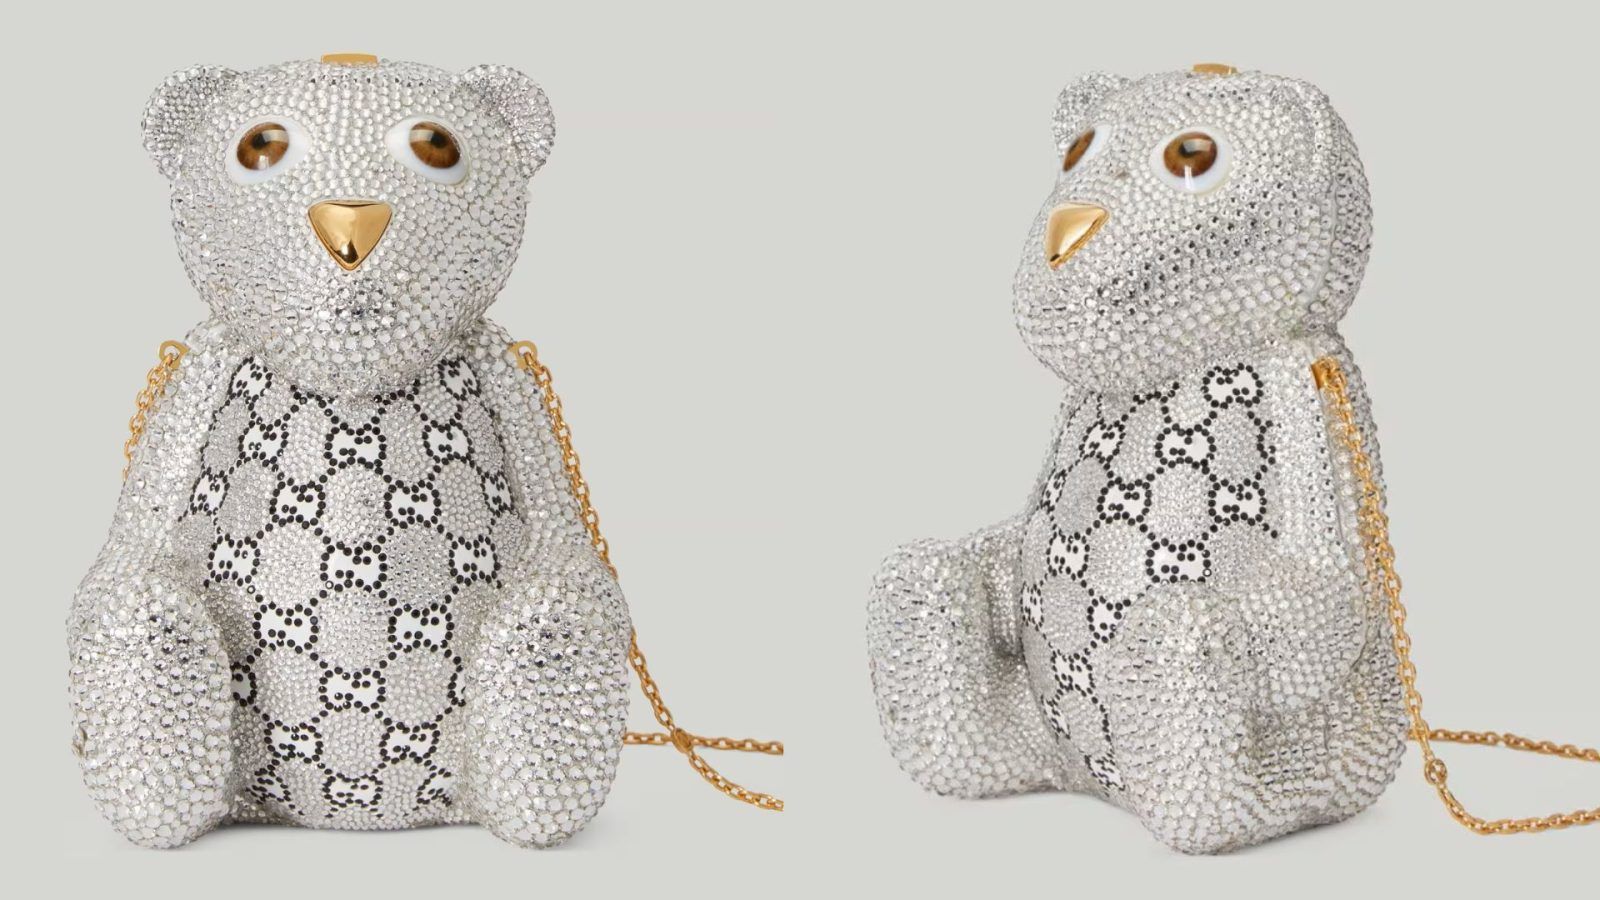 Gucci launches Teddy bear-shaped Minaudière bags